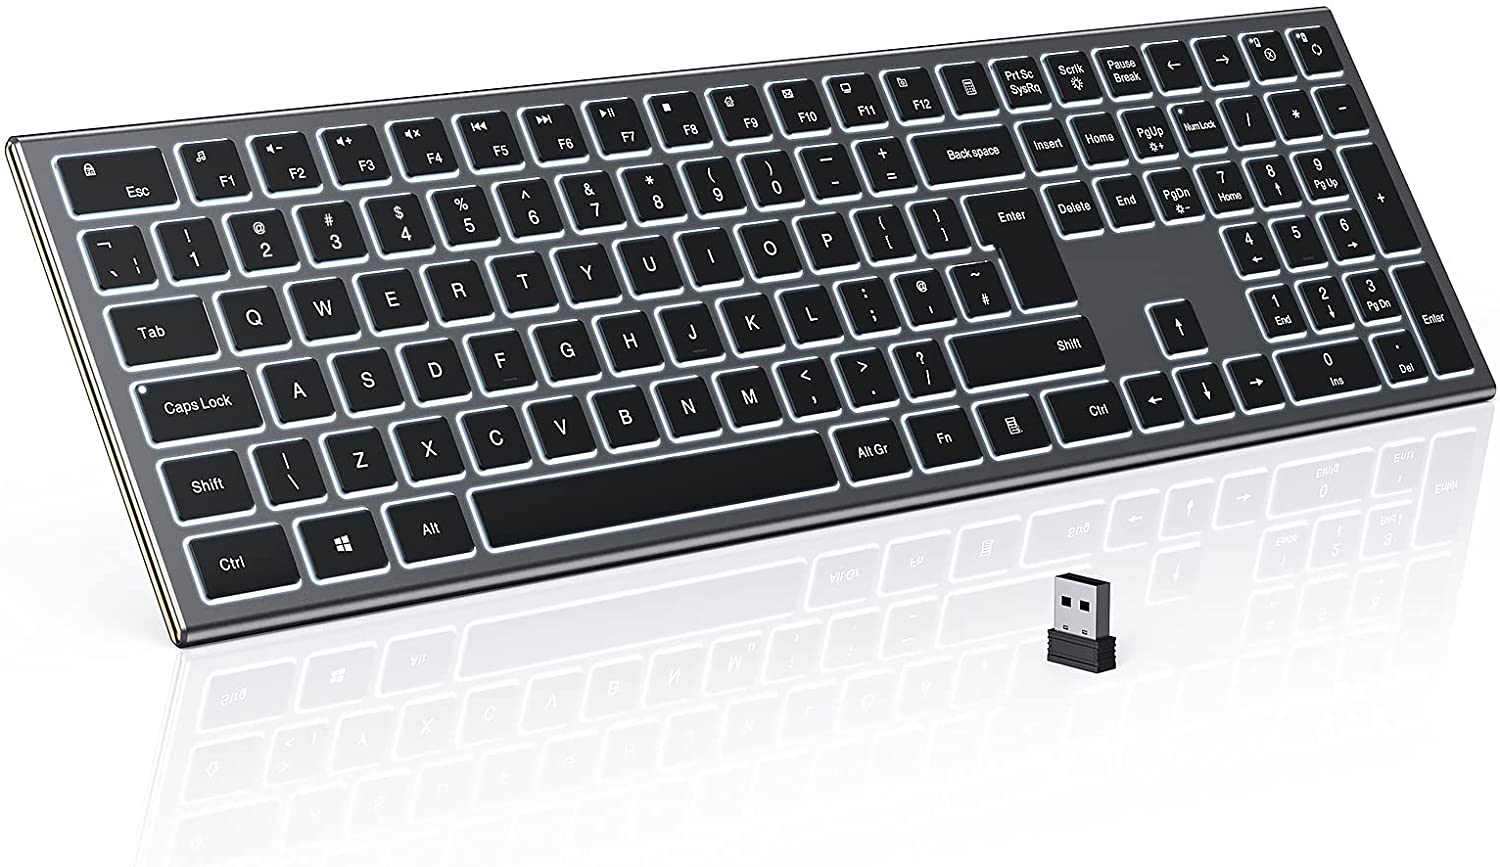 Backlit Wireless Keyboard, seenda 2.4GHz Ultra Slim Rechargeable Keyboard, Illuminated Wireless Keyboard for Computer, Laptop, Desktop, PC, Surface, Smart TV, Windows 10/8/7 (Black and Grey).